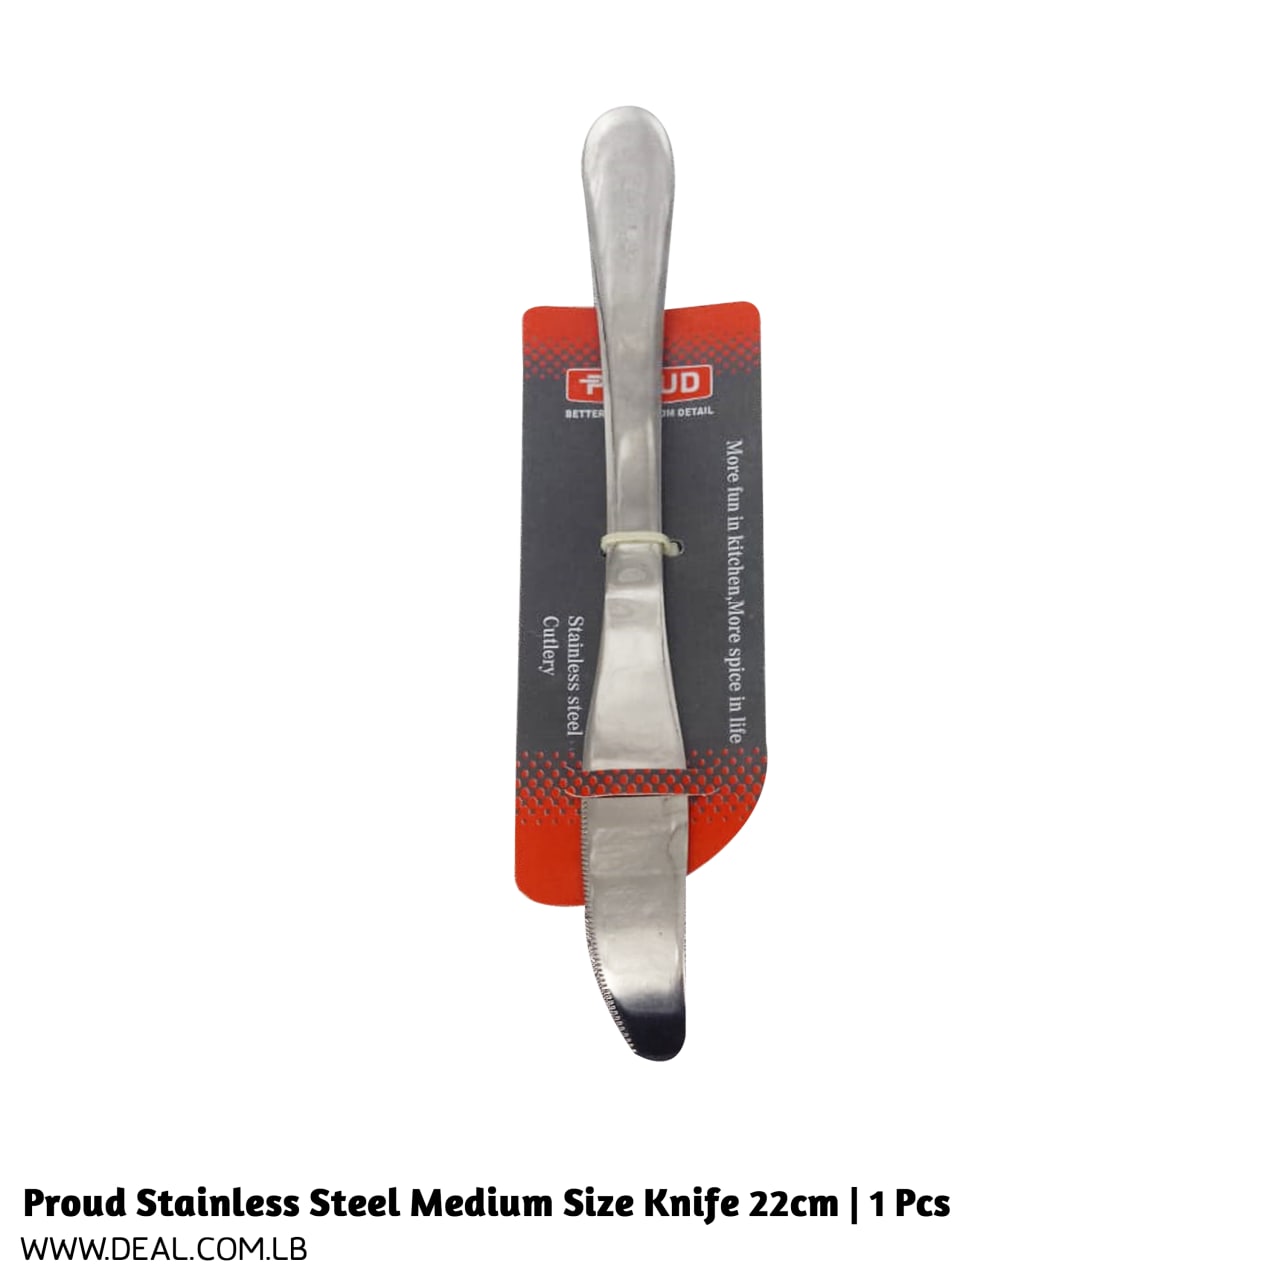 Proud Stainless Steel Medium Size Knife 22cm | 1 Pcs